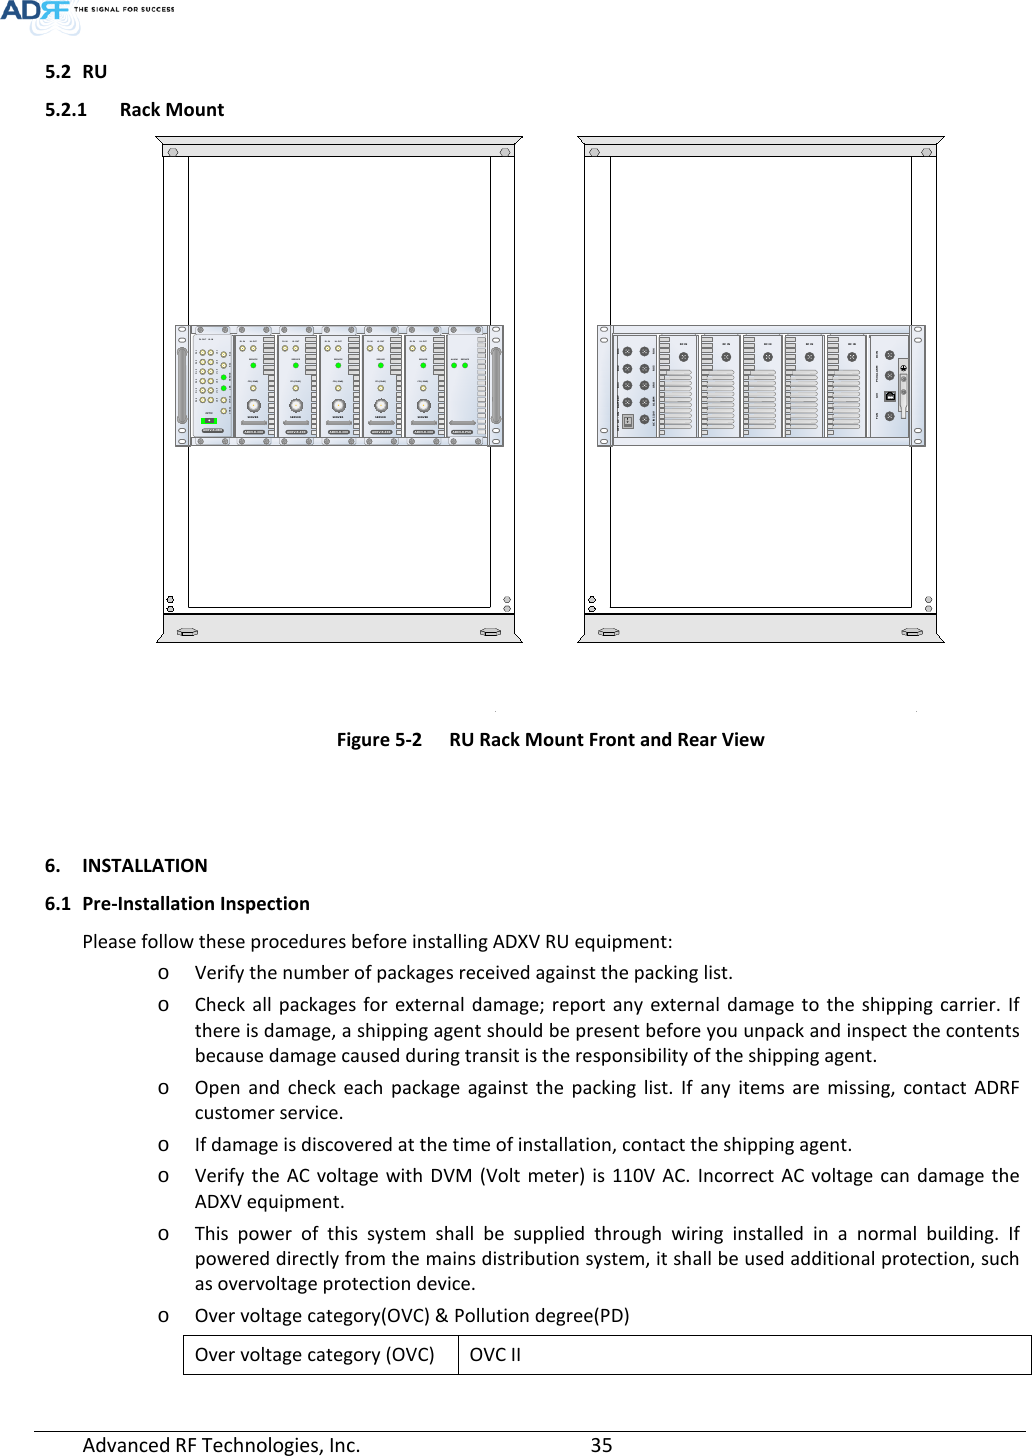 Page 35 of ADRF KOREA ADXV DAS(Distributed Antenna System) User Manual ADXV DAS